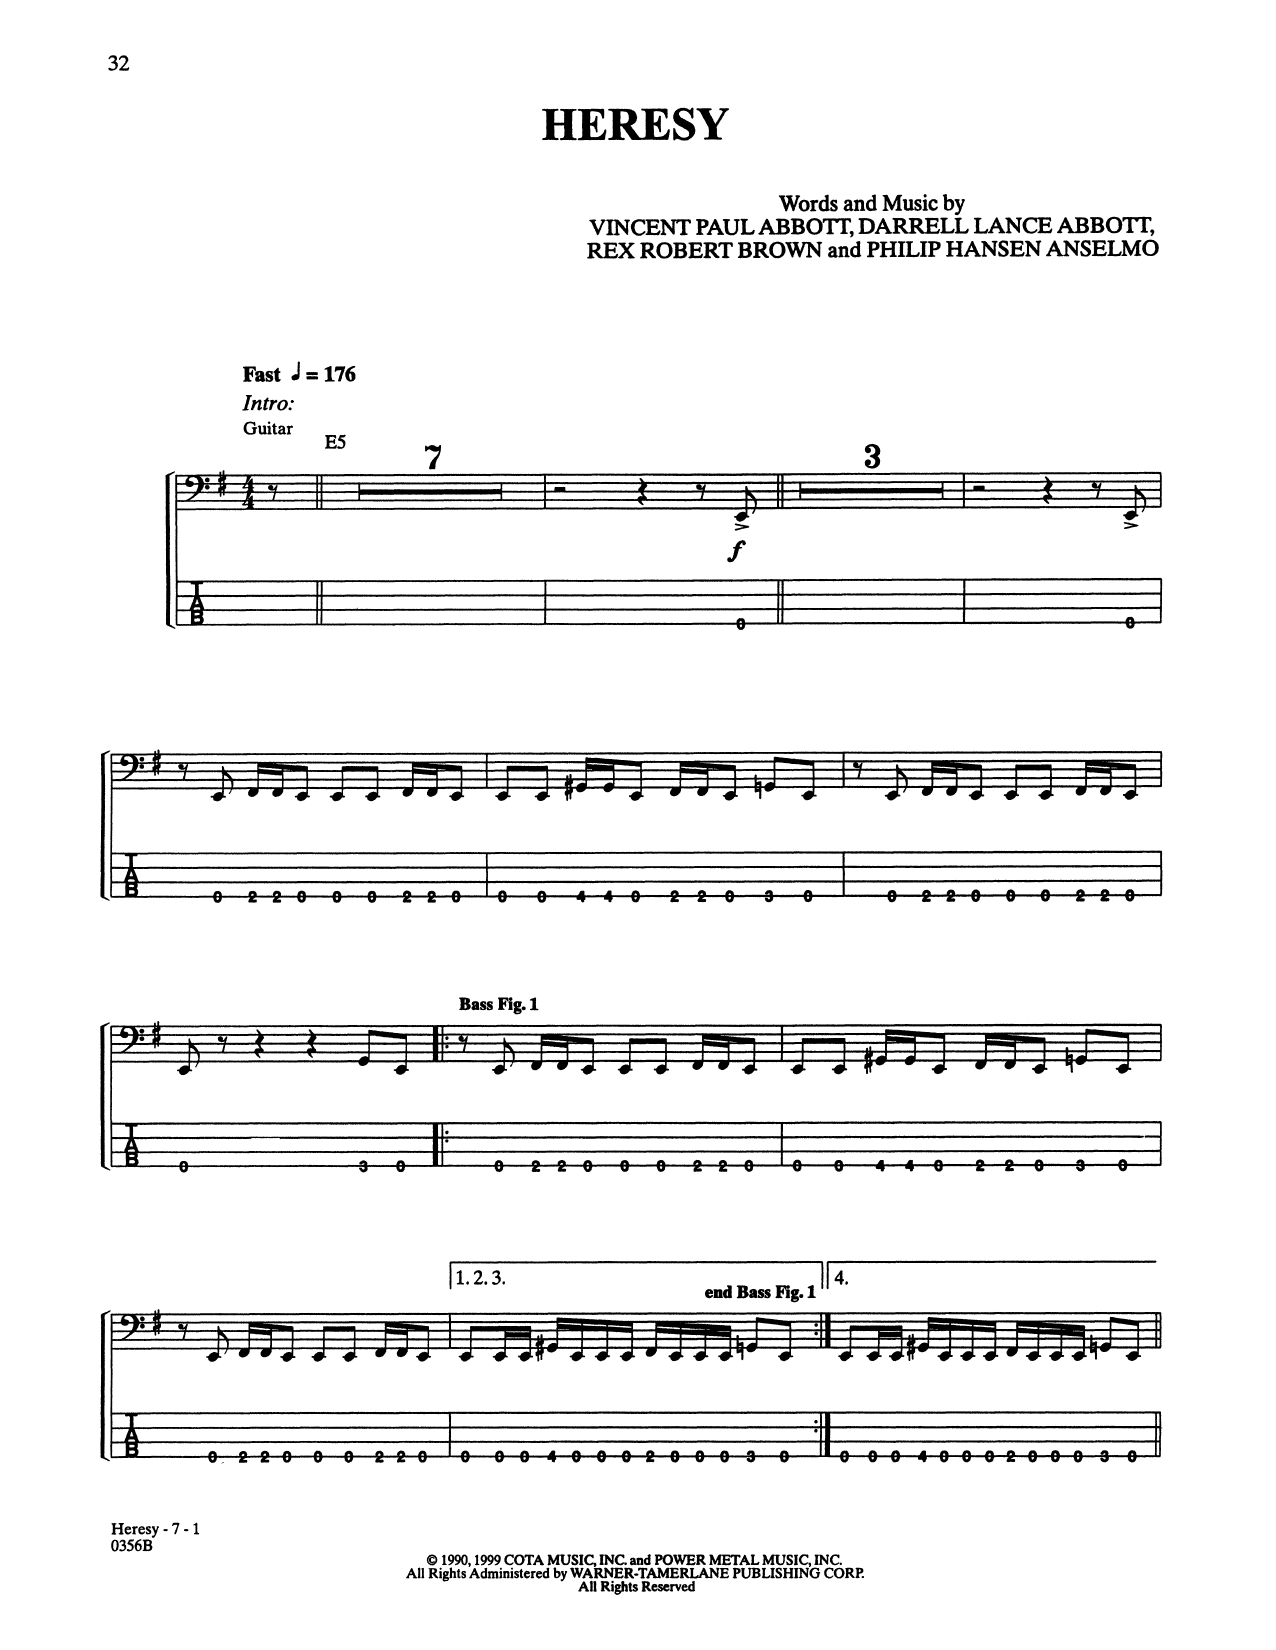 Pantera Heresy Sheet Music Notes & Chords for Bass Guitar Tab - Download or Print PDF